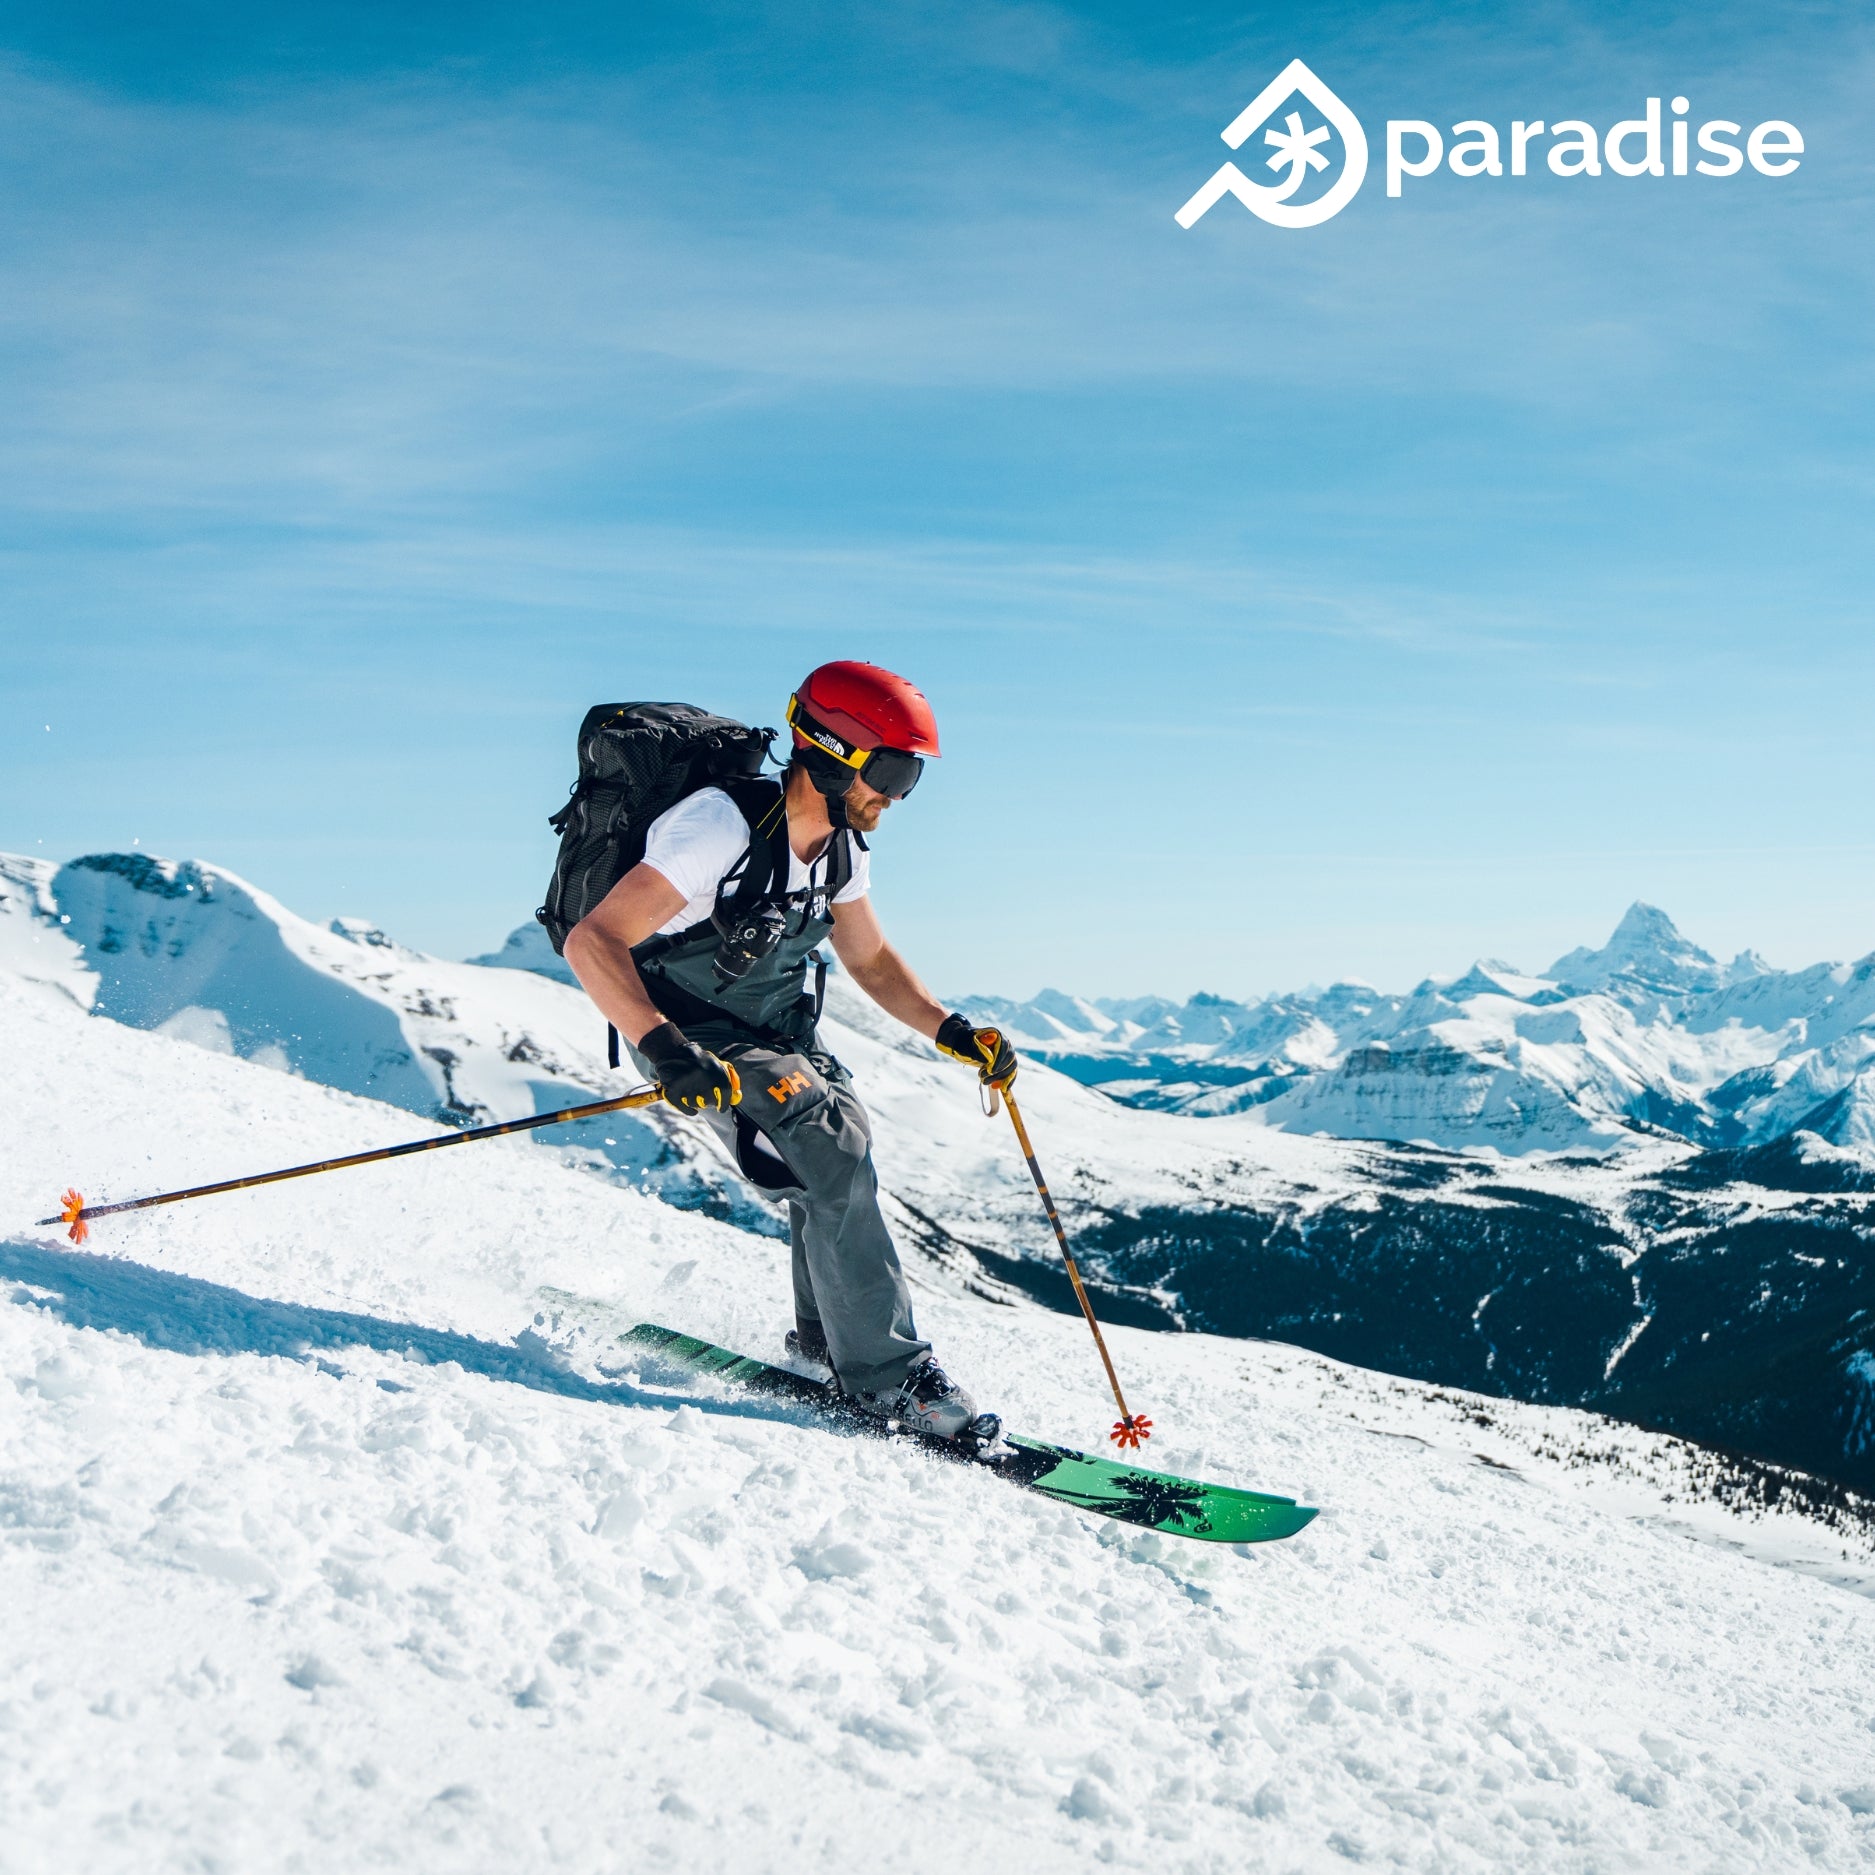 8 Must-Visit Destinations for Your Next Ski Adventure